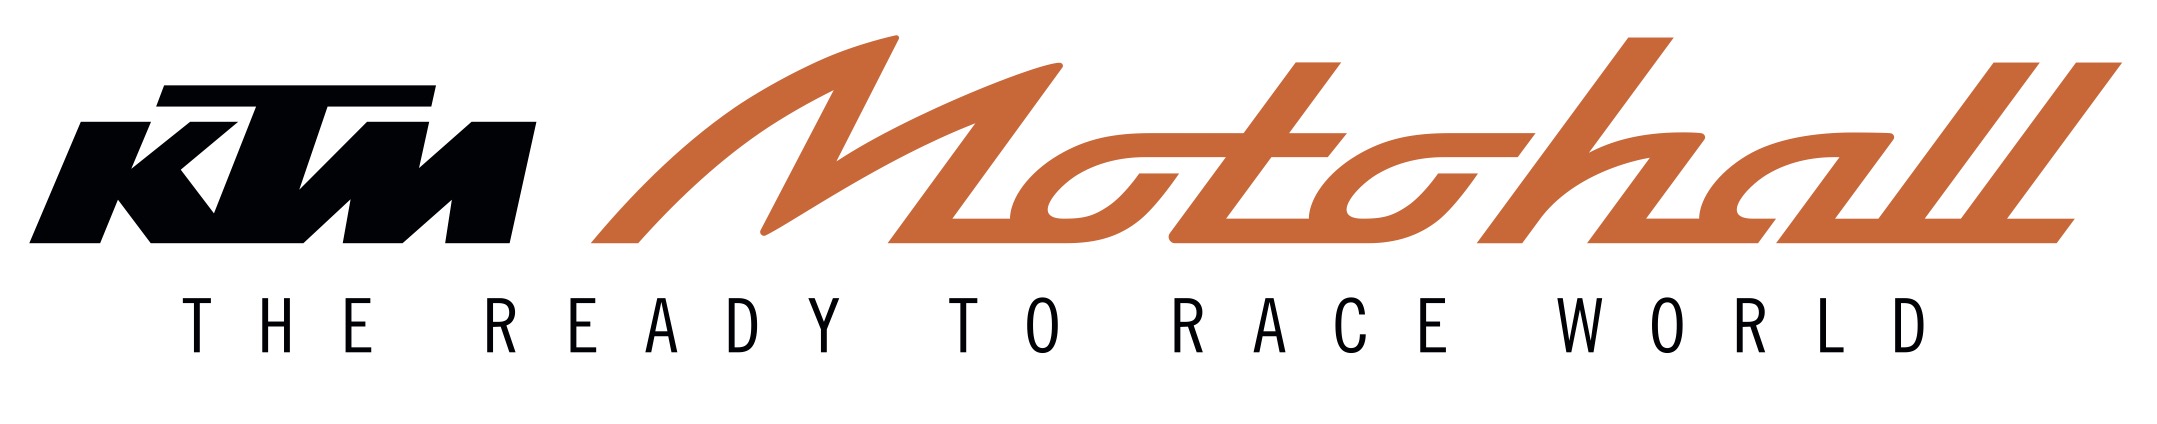 467977_KTM Motohall The R2R World_black orange_RGB_KTM Motohall